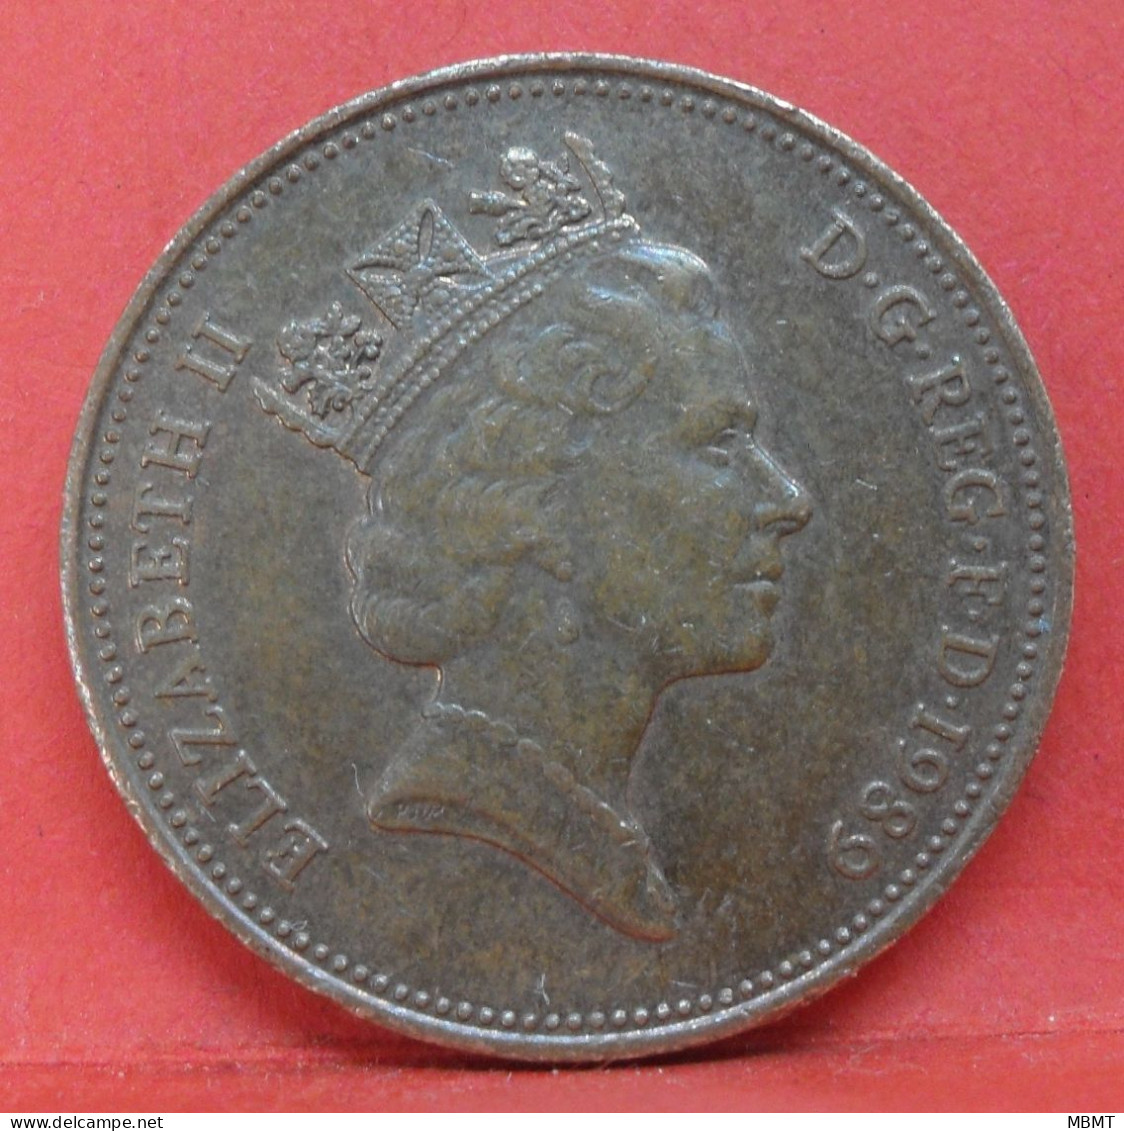 2 Pence 1989 - TTB - Pièce Monnaie Grande-Bretagne - Article N°2709 - 2 Pence & 2 New Pence